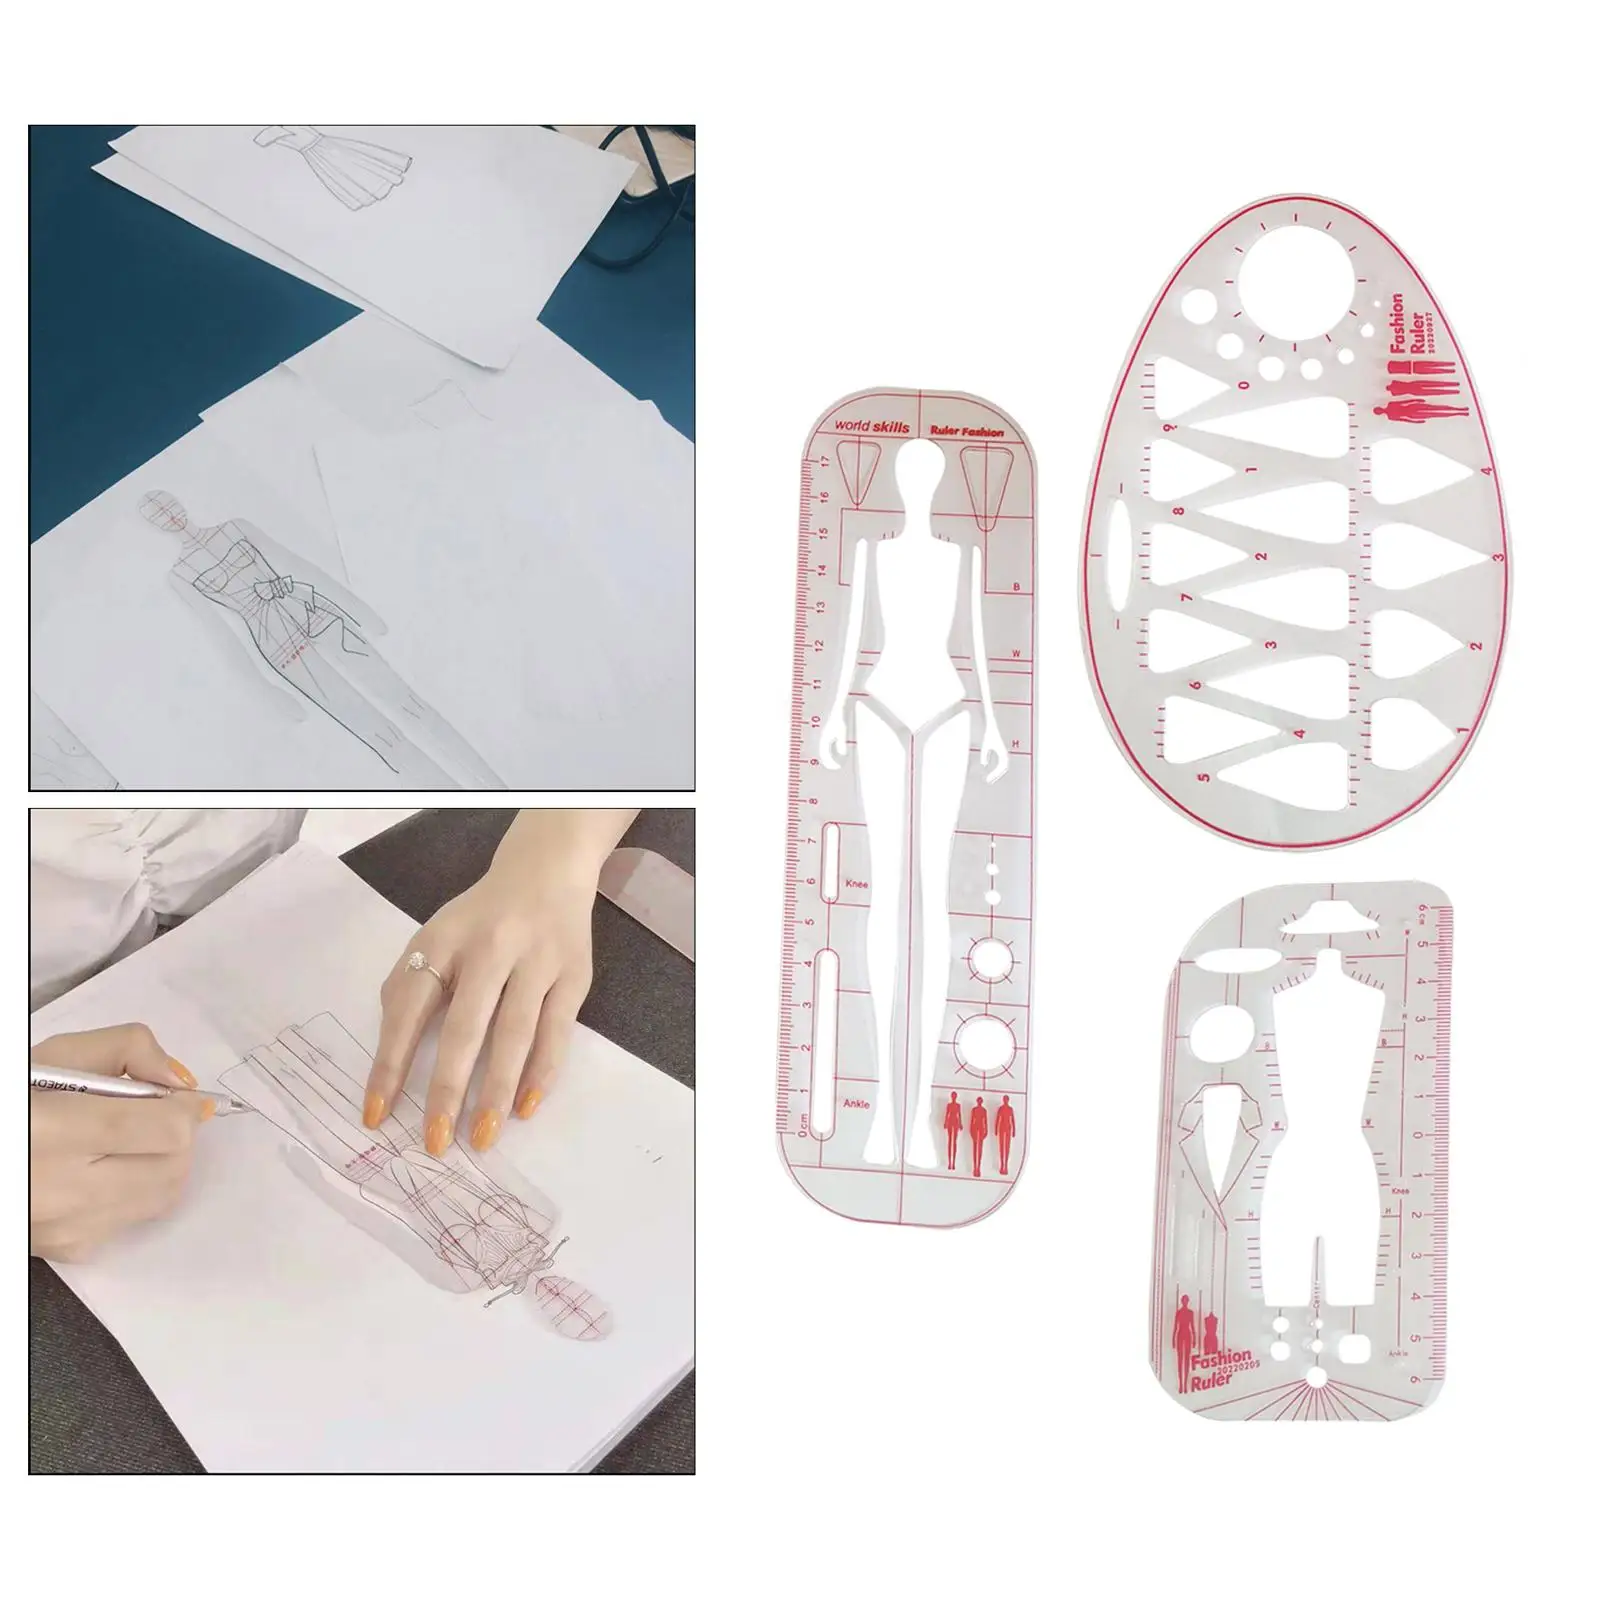 Fashion Drawing Template Ruler Tailors Transparent Clothing Measuring Lightweight Garment Design Sewing Humanoid Patterns Design